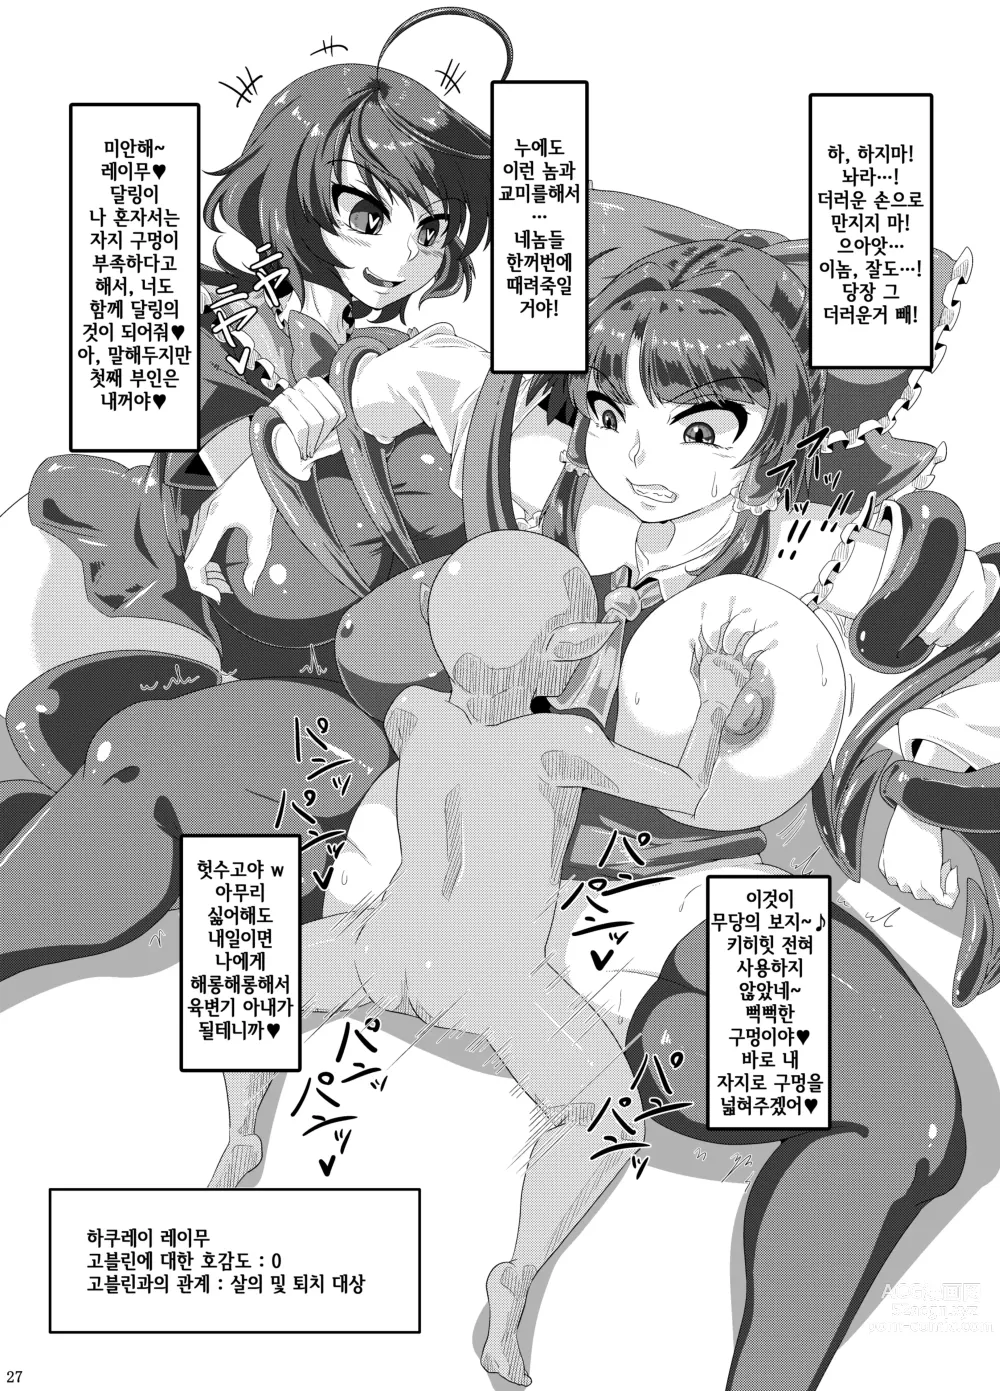 Page 26 of doujinshi 어떻게 봐도 누에쨩 순애 고블린 간